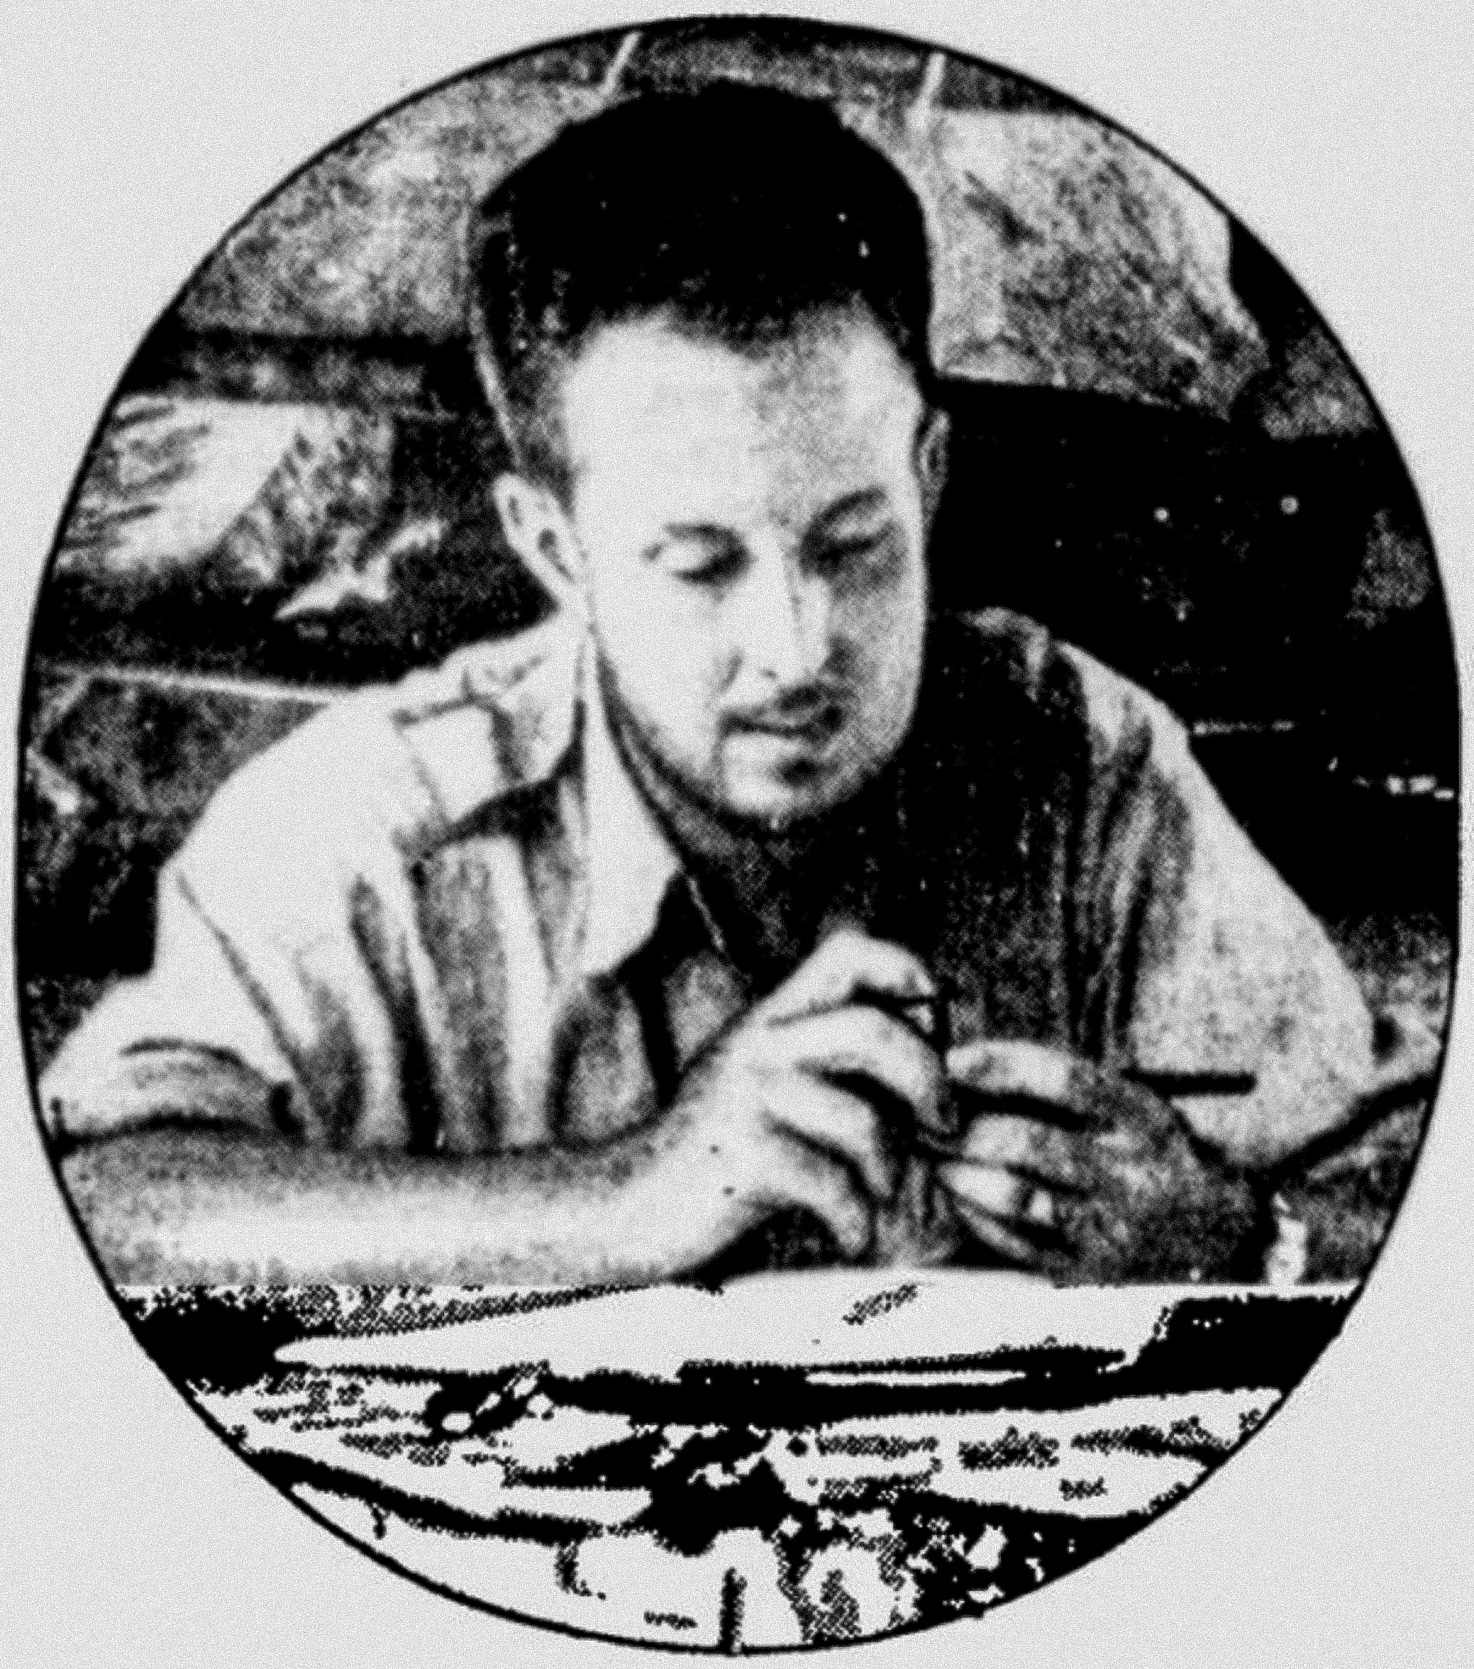 American explorer Theodore Morde seated at his desk in the Honduran rainforest while exploring la Mosquitia in 1940